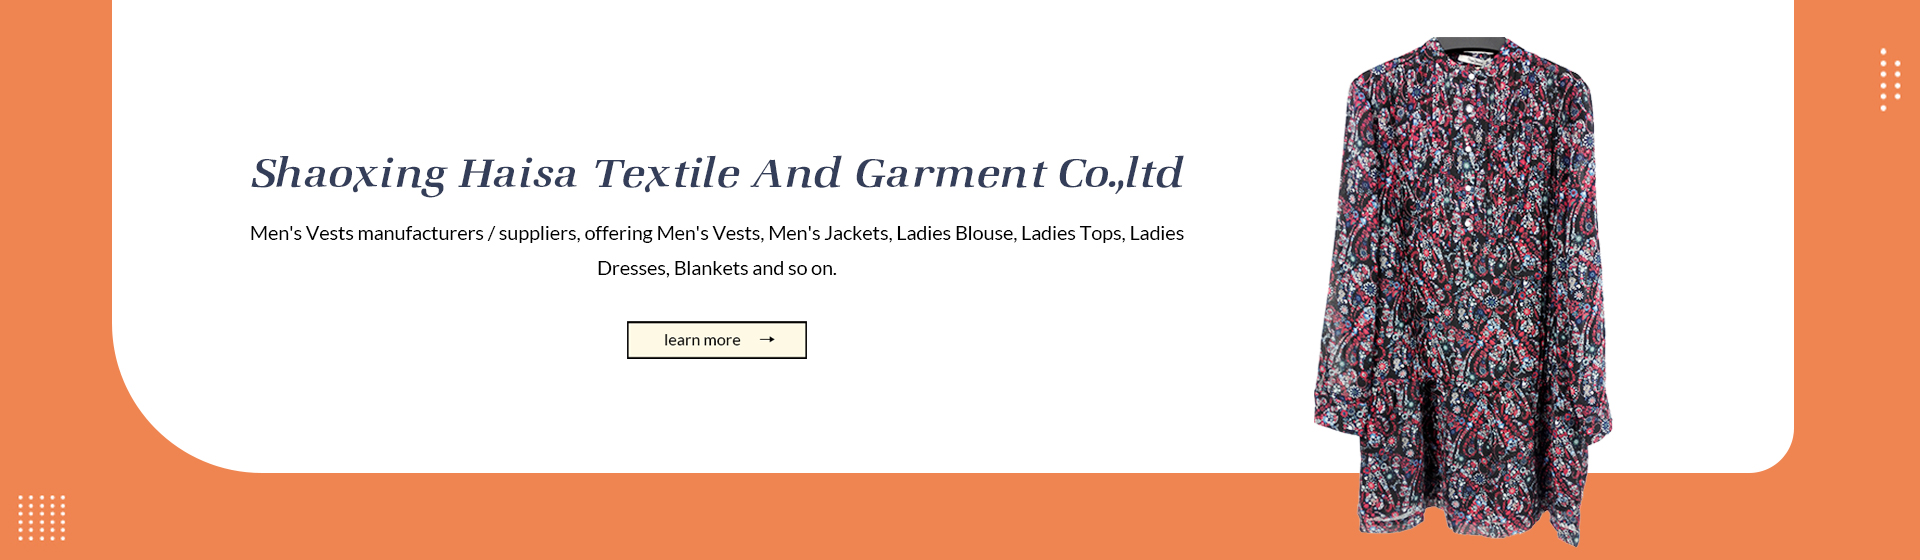 Shaoxing Haisa Textile And Garment Co.,Ltd